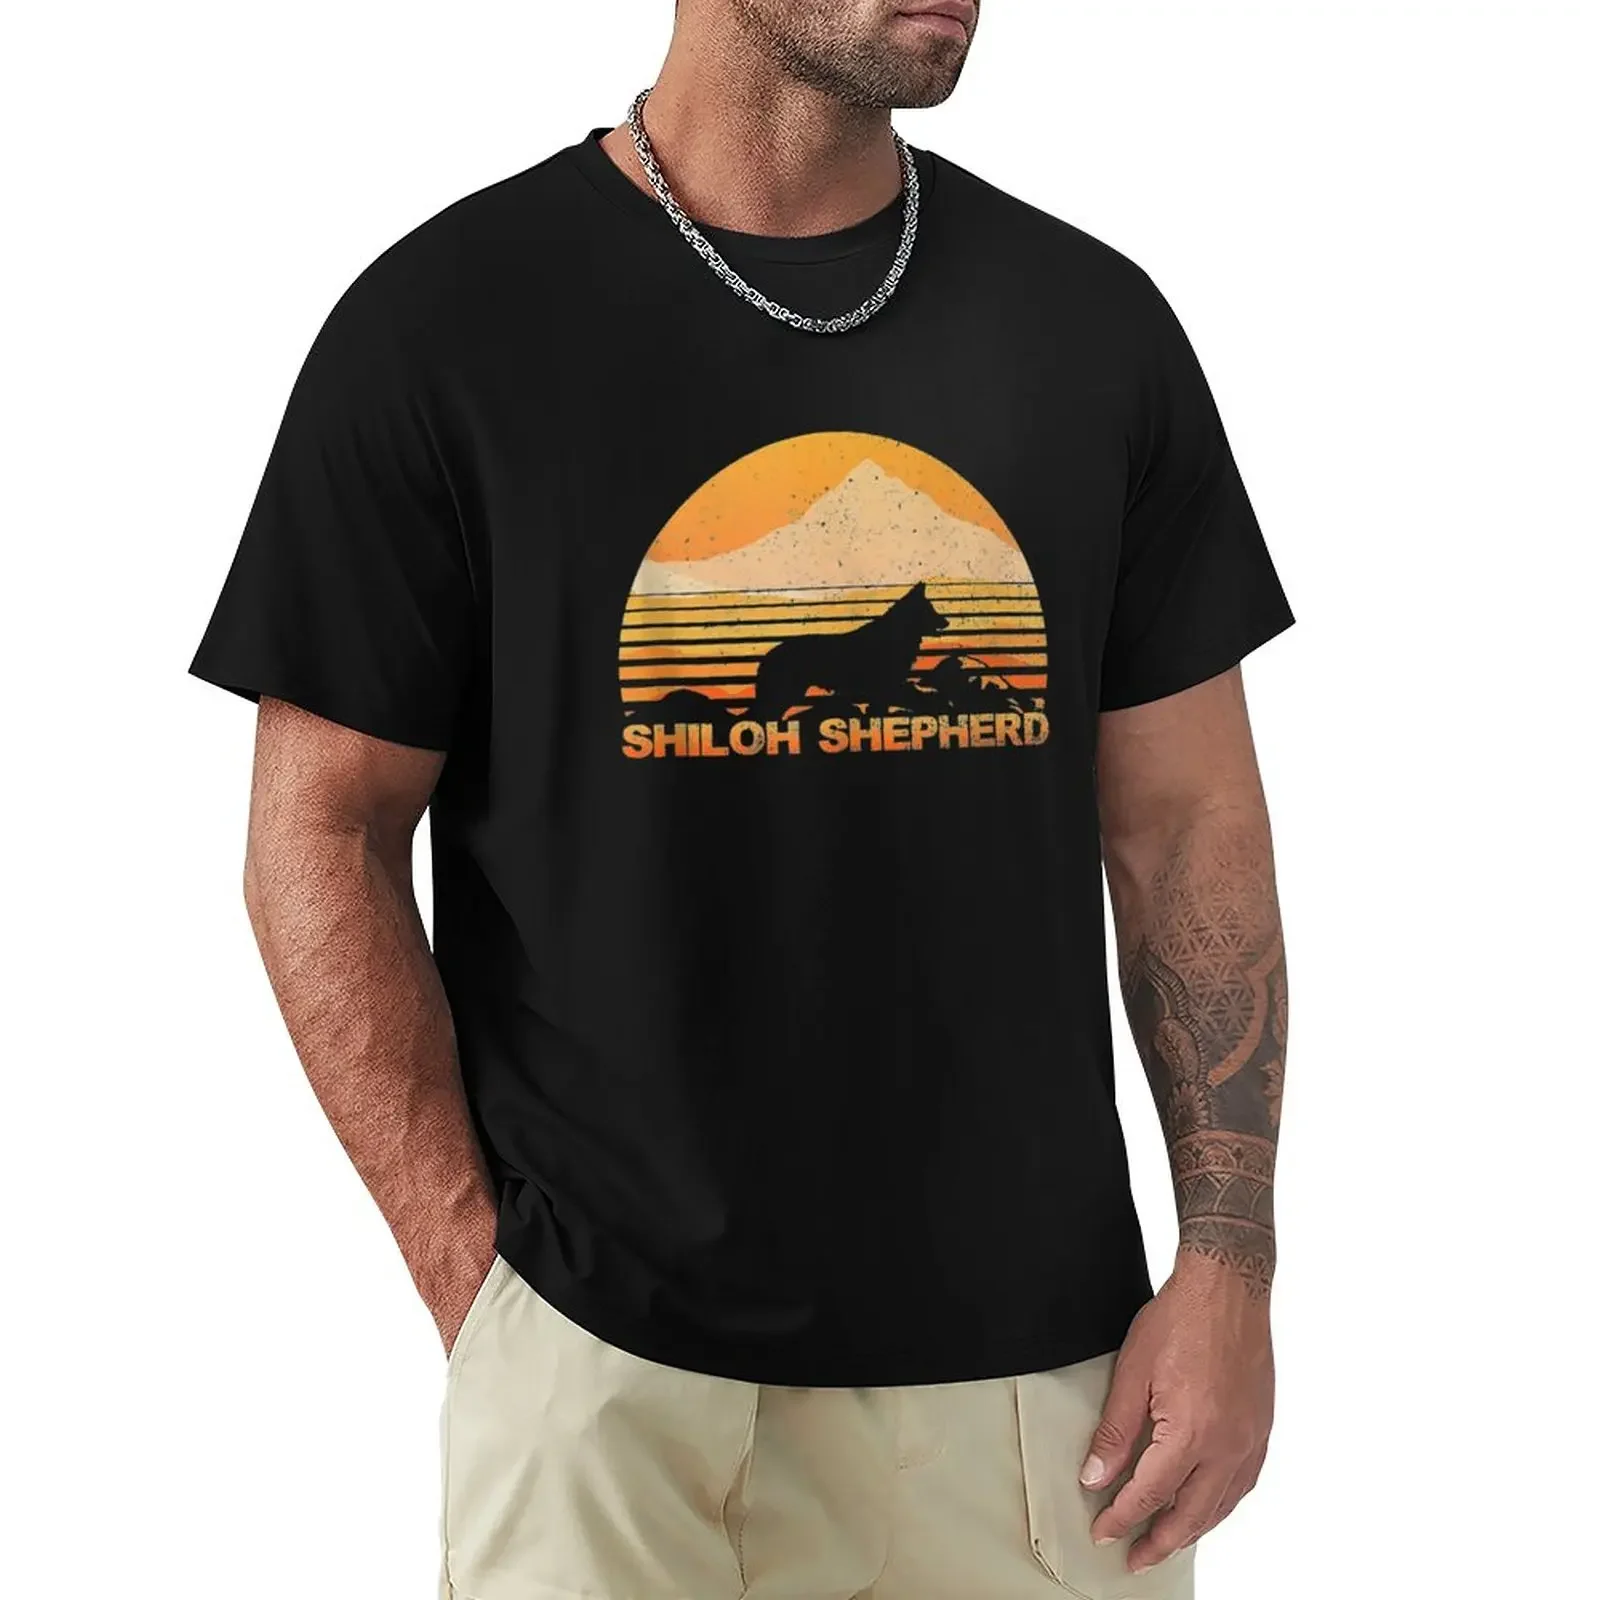 

SHILOH SHEPHERD - Vintage Retro T-Shirt quick drying aesthetic clothes tops plus sizes black t-shirts for men